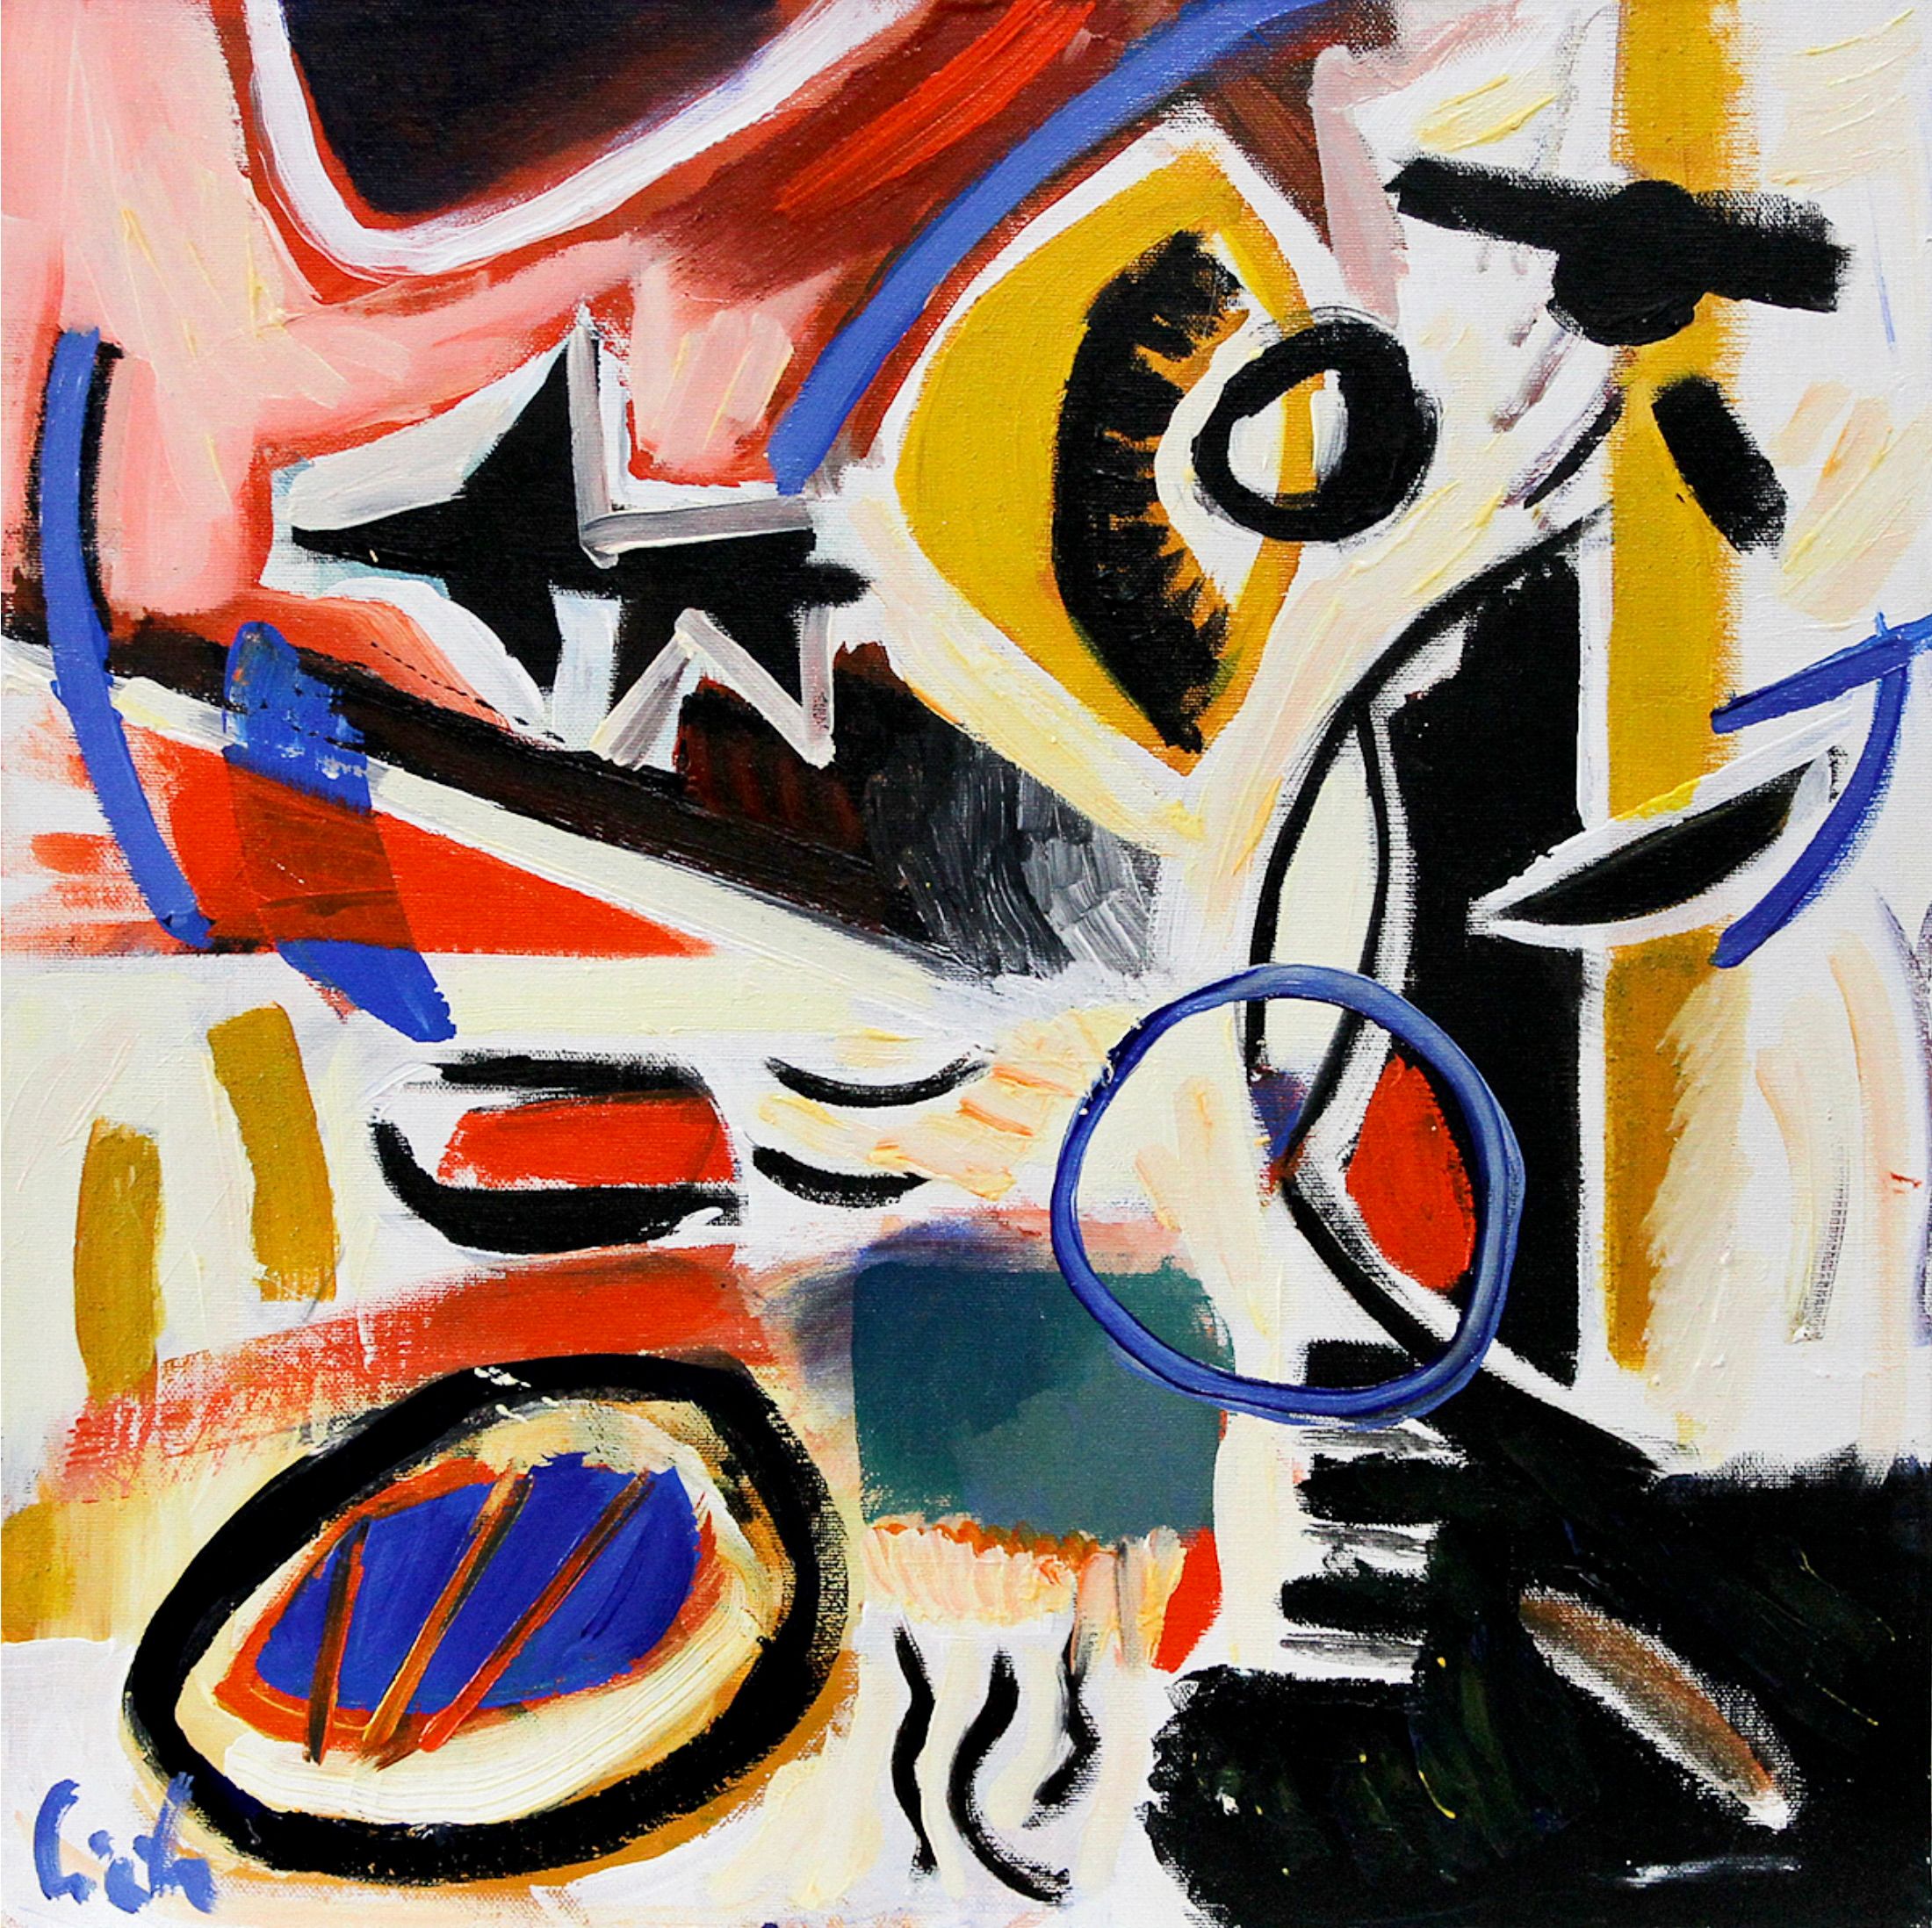 MECESLA Maciej Cieśla, "Abstract composition 42", 画布上的抽象色彩画